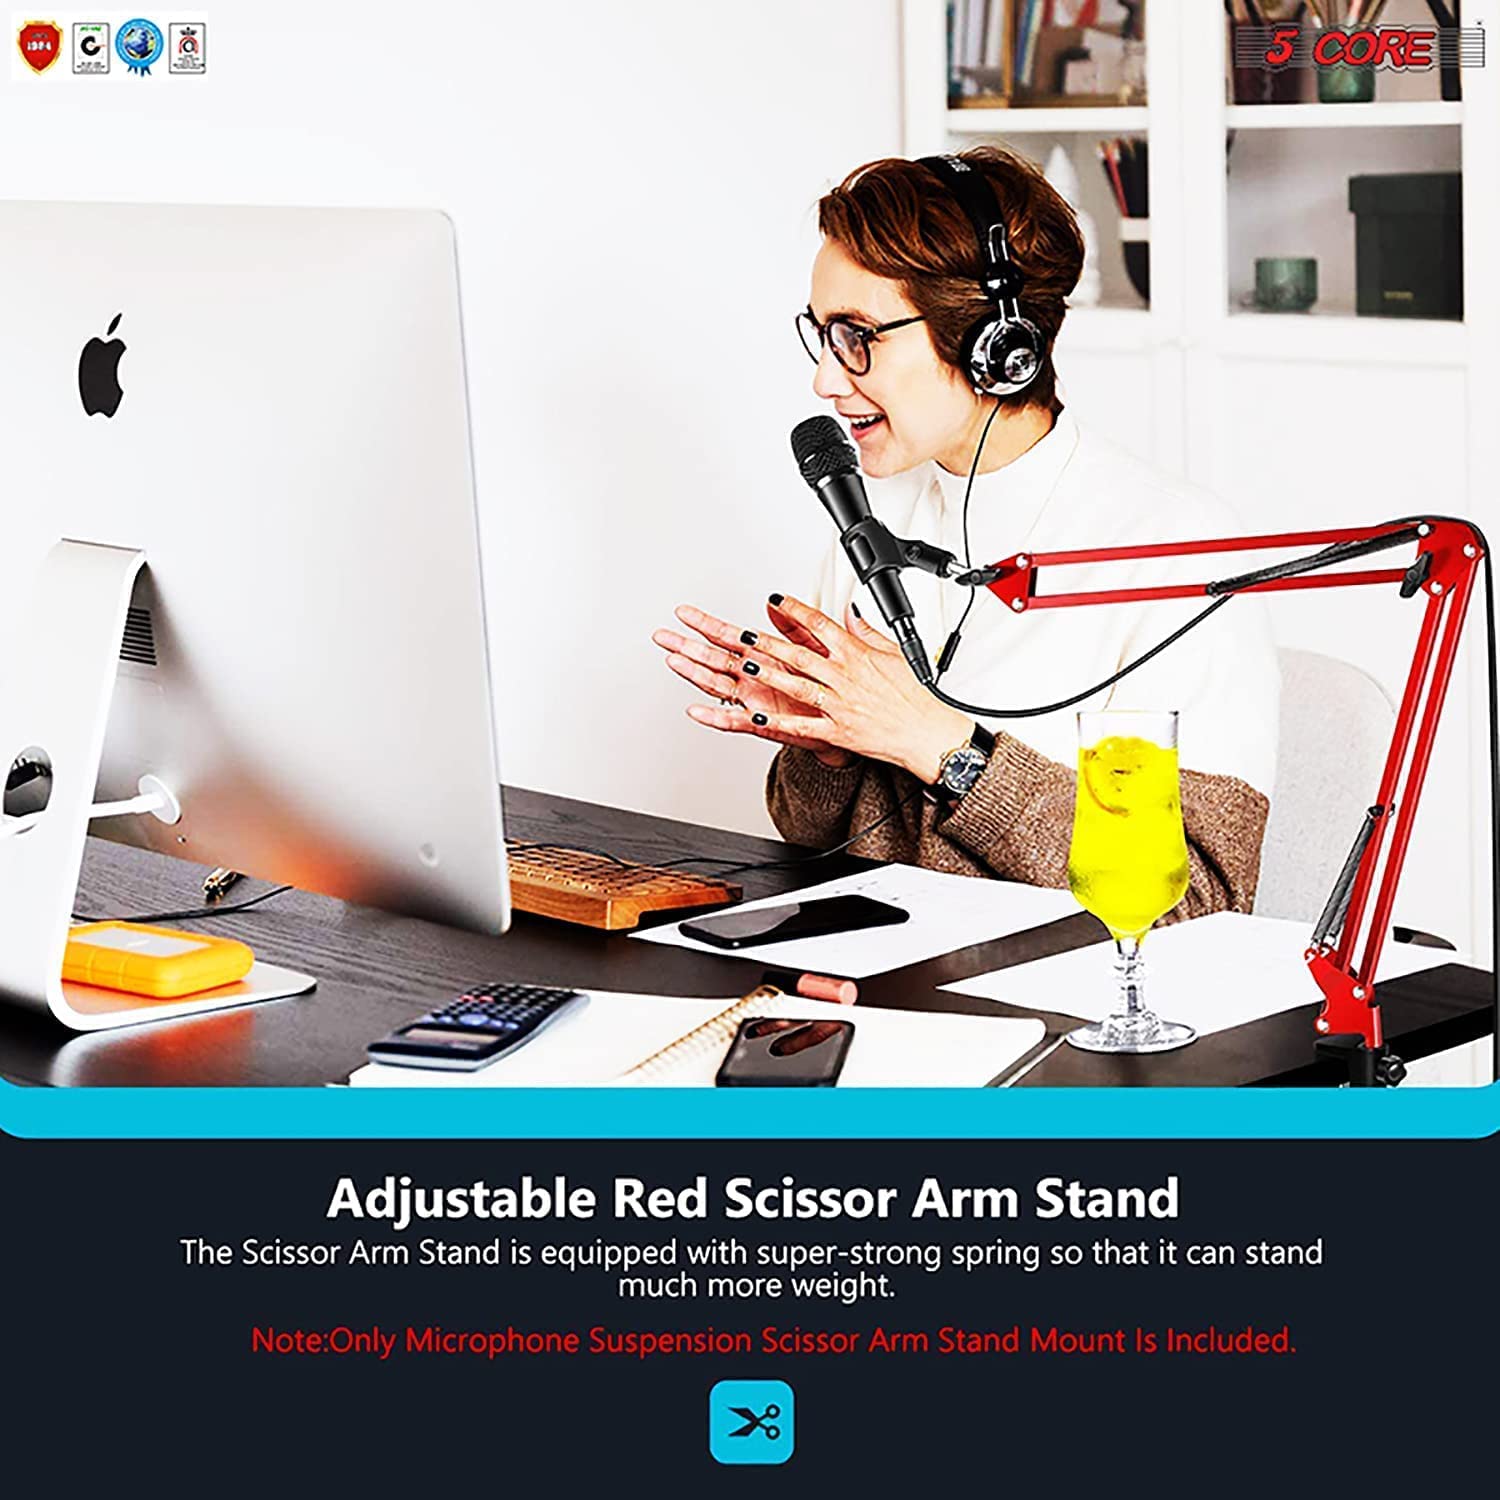 Adjustable red scissor arm stand